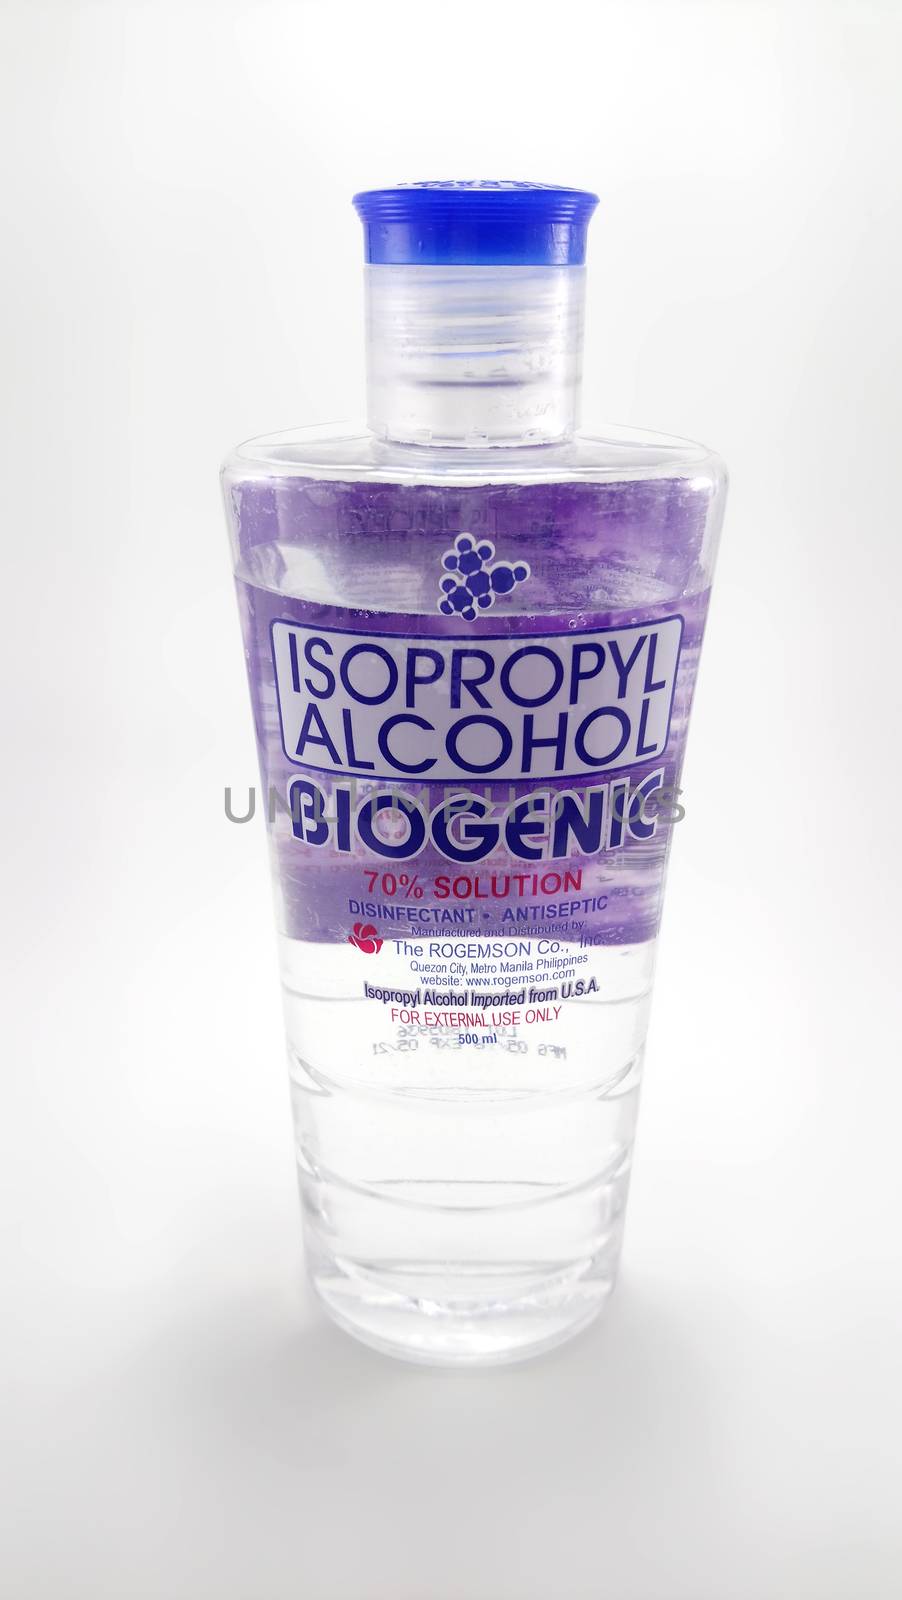 MANILA, PH - JUNE 23 - Biogenic isopropyl alcohol on June 23, 2020 in Manila, Philippines.